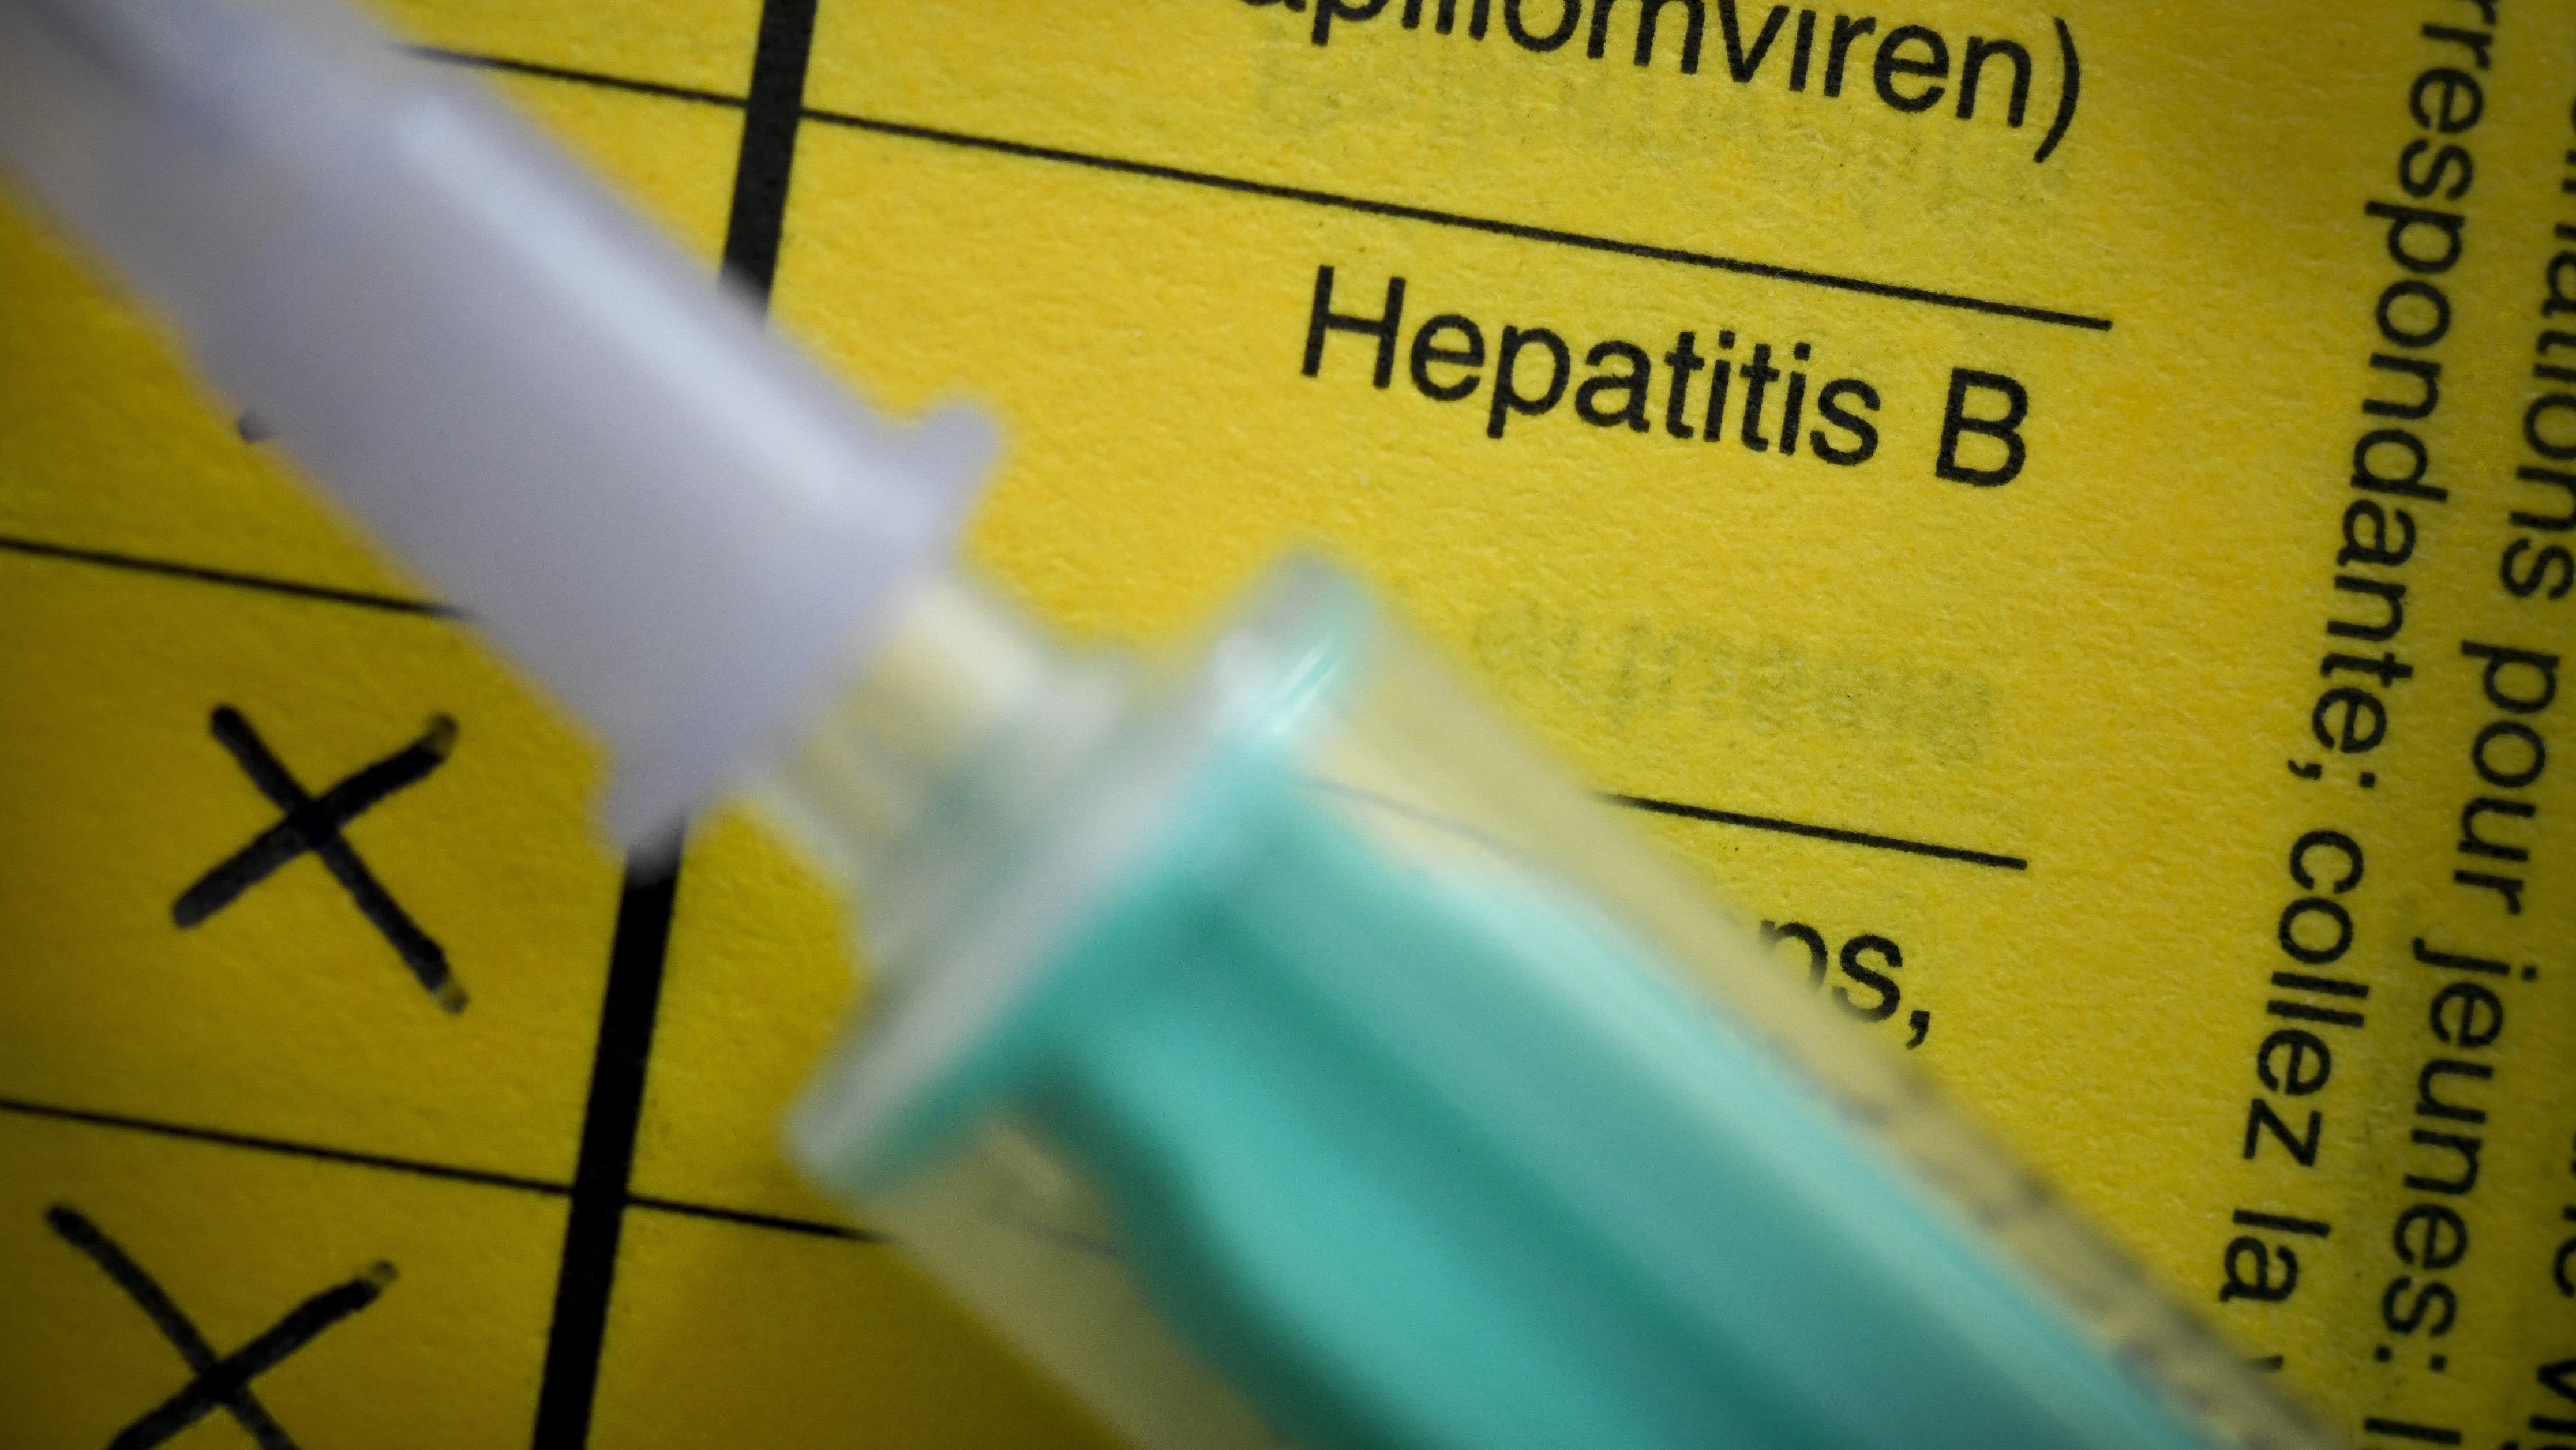 behandlungen fur erwachsene virale hepititus